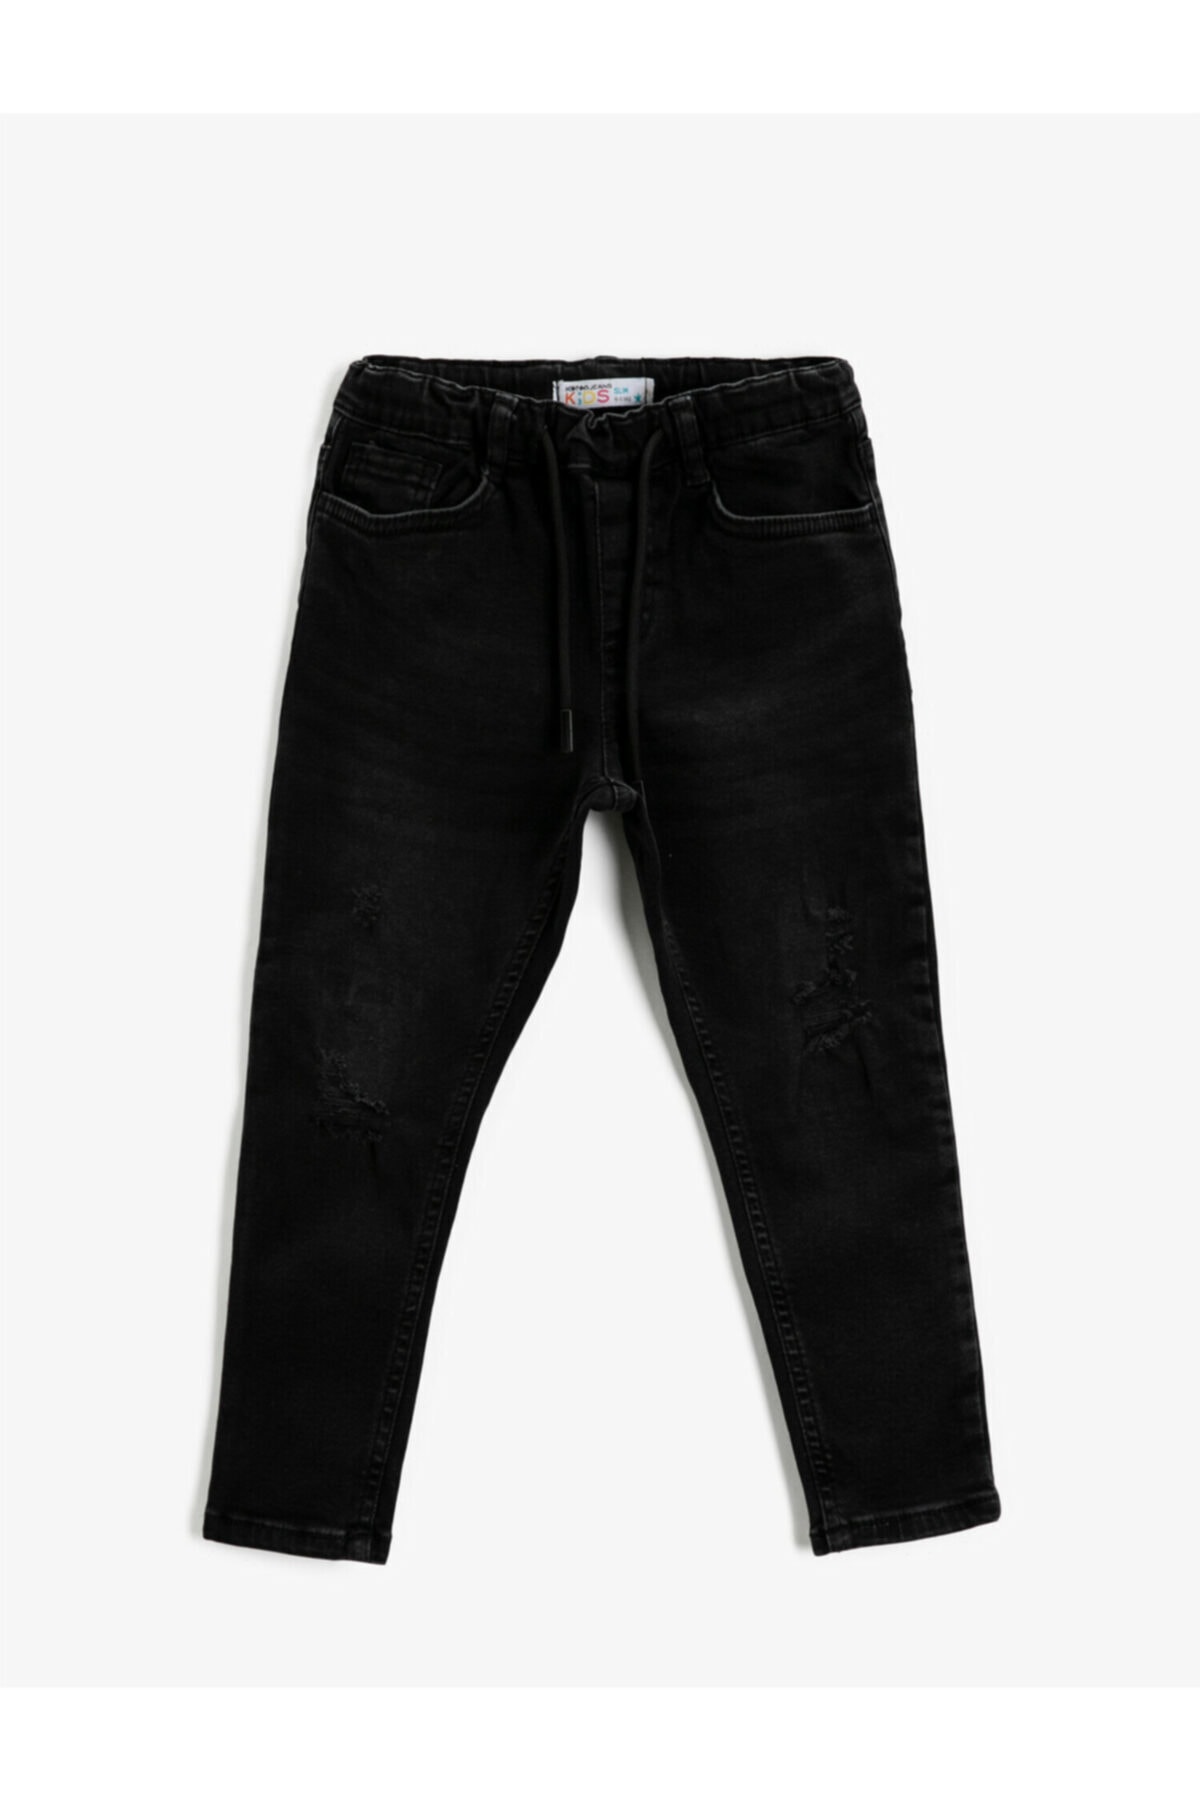 Koton Jeans Schwarz Skinny Fast ausverkauft